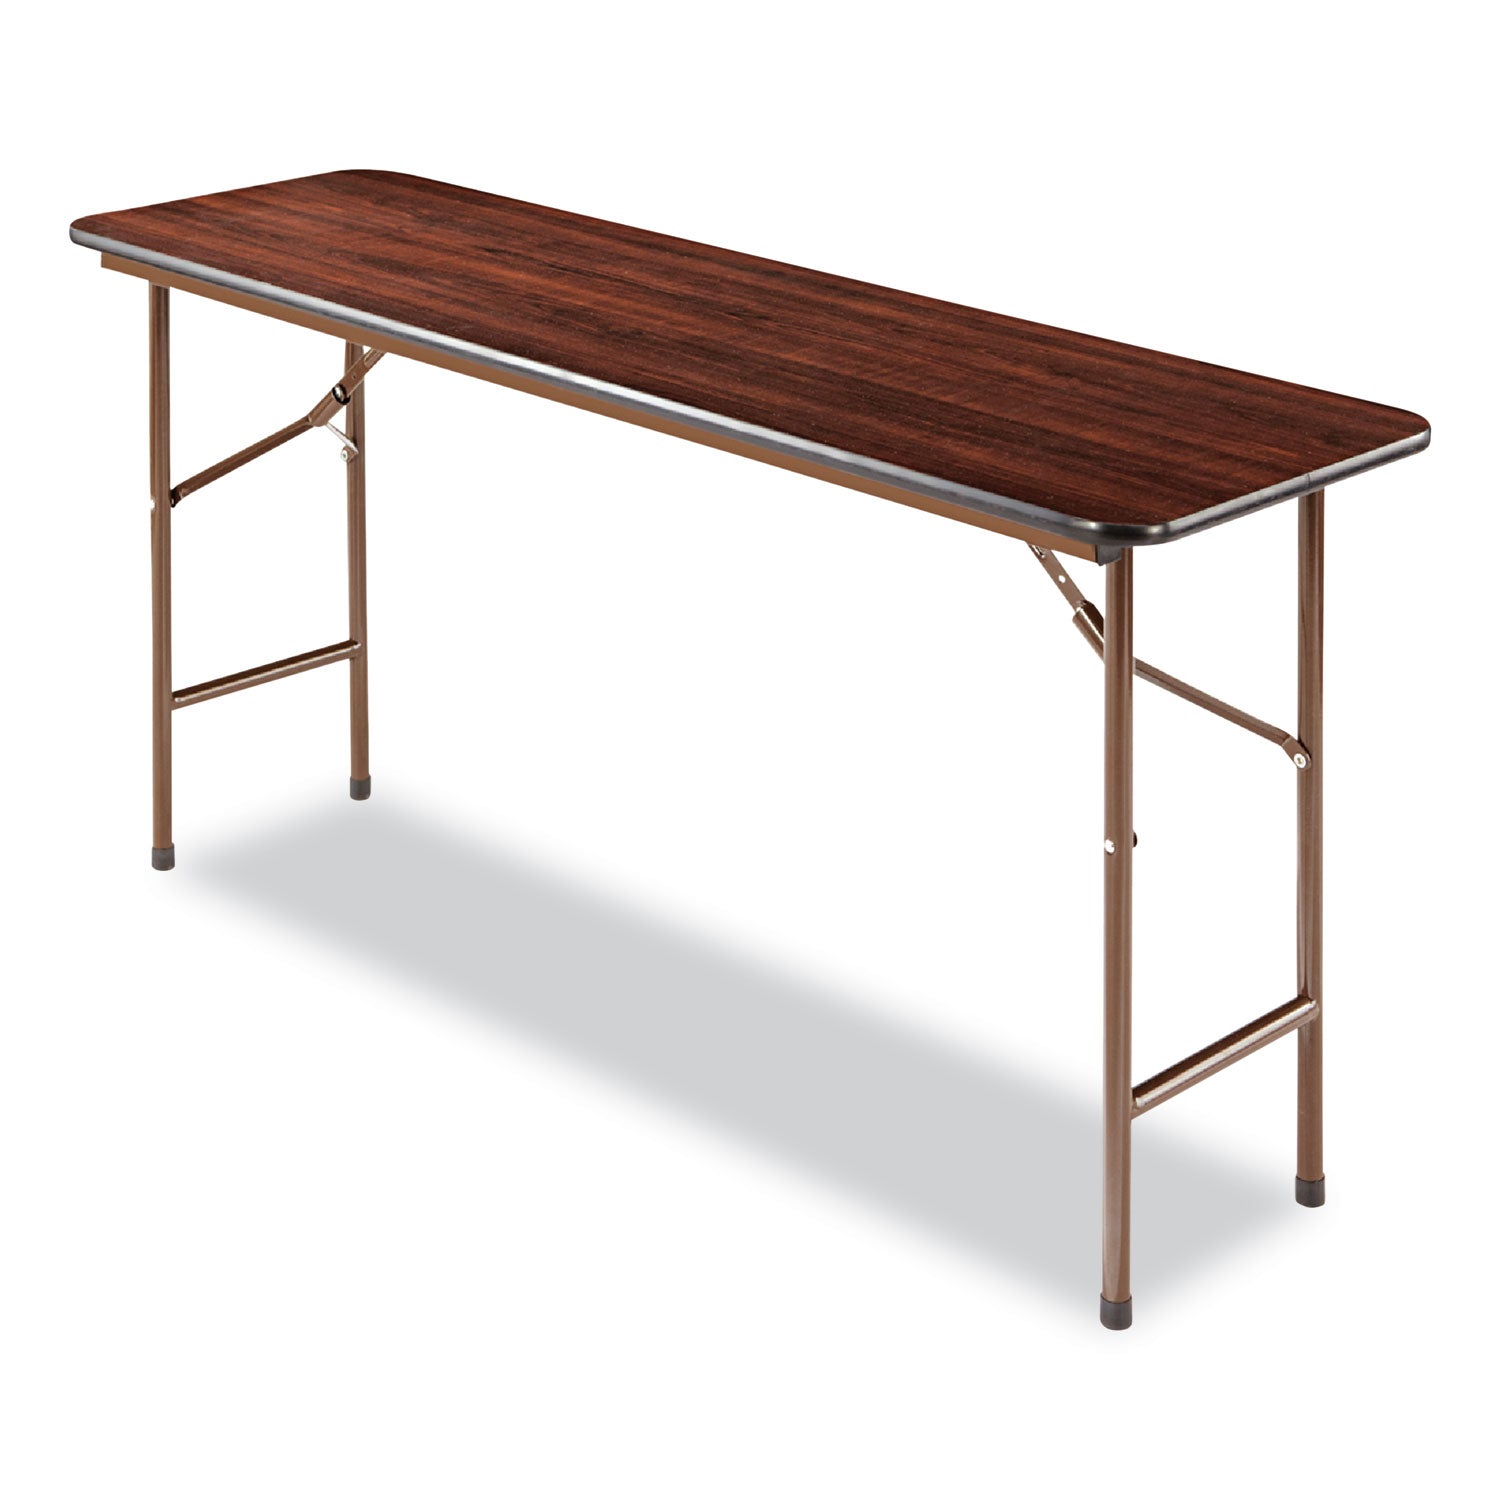 wood-folding-table-rectangular-5988w-x-1775d-x-2913h-mahogany_aleft726018my - 7